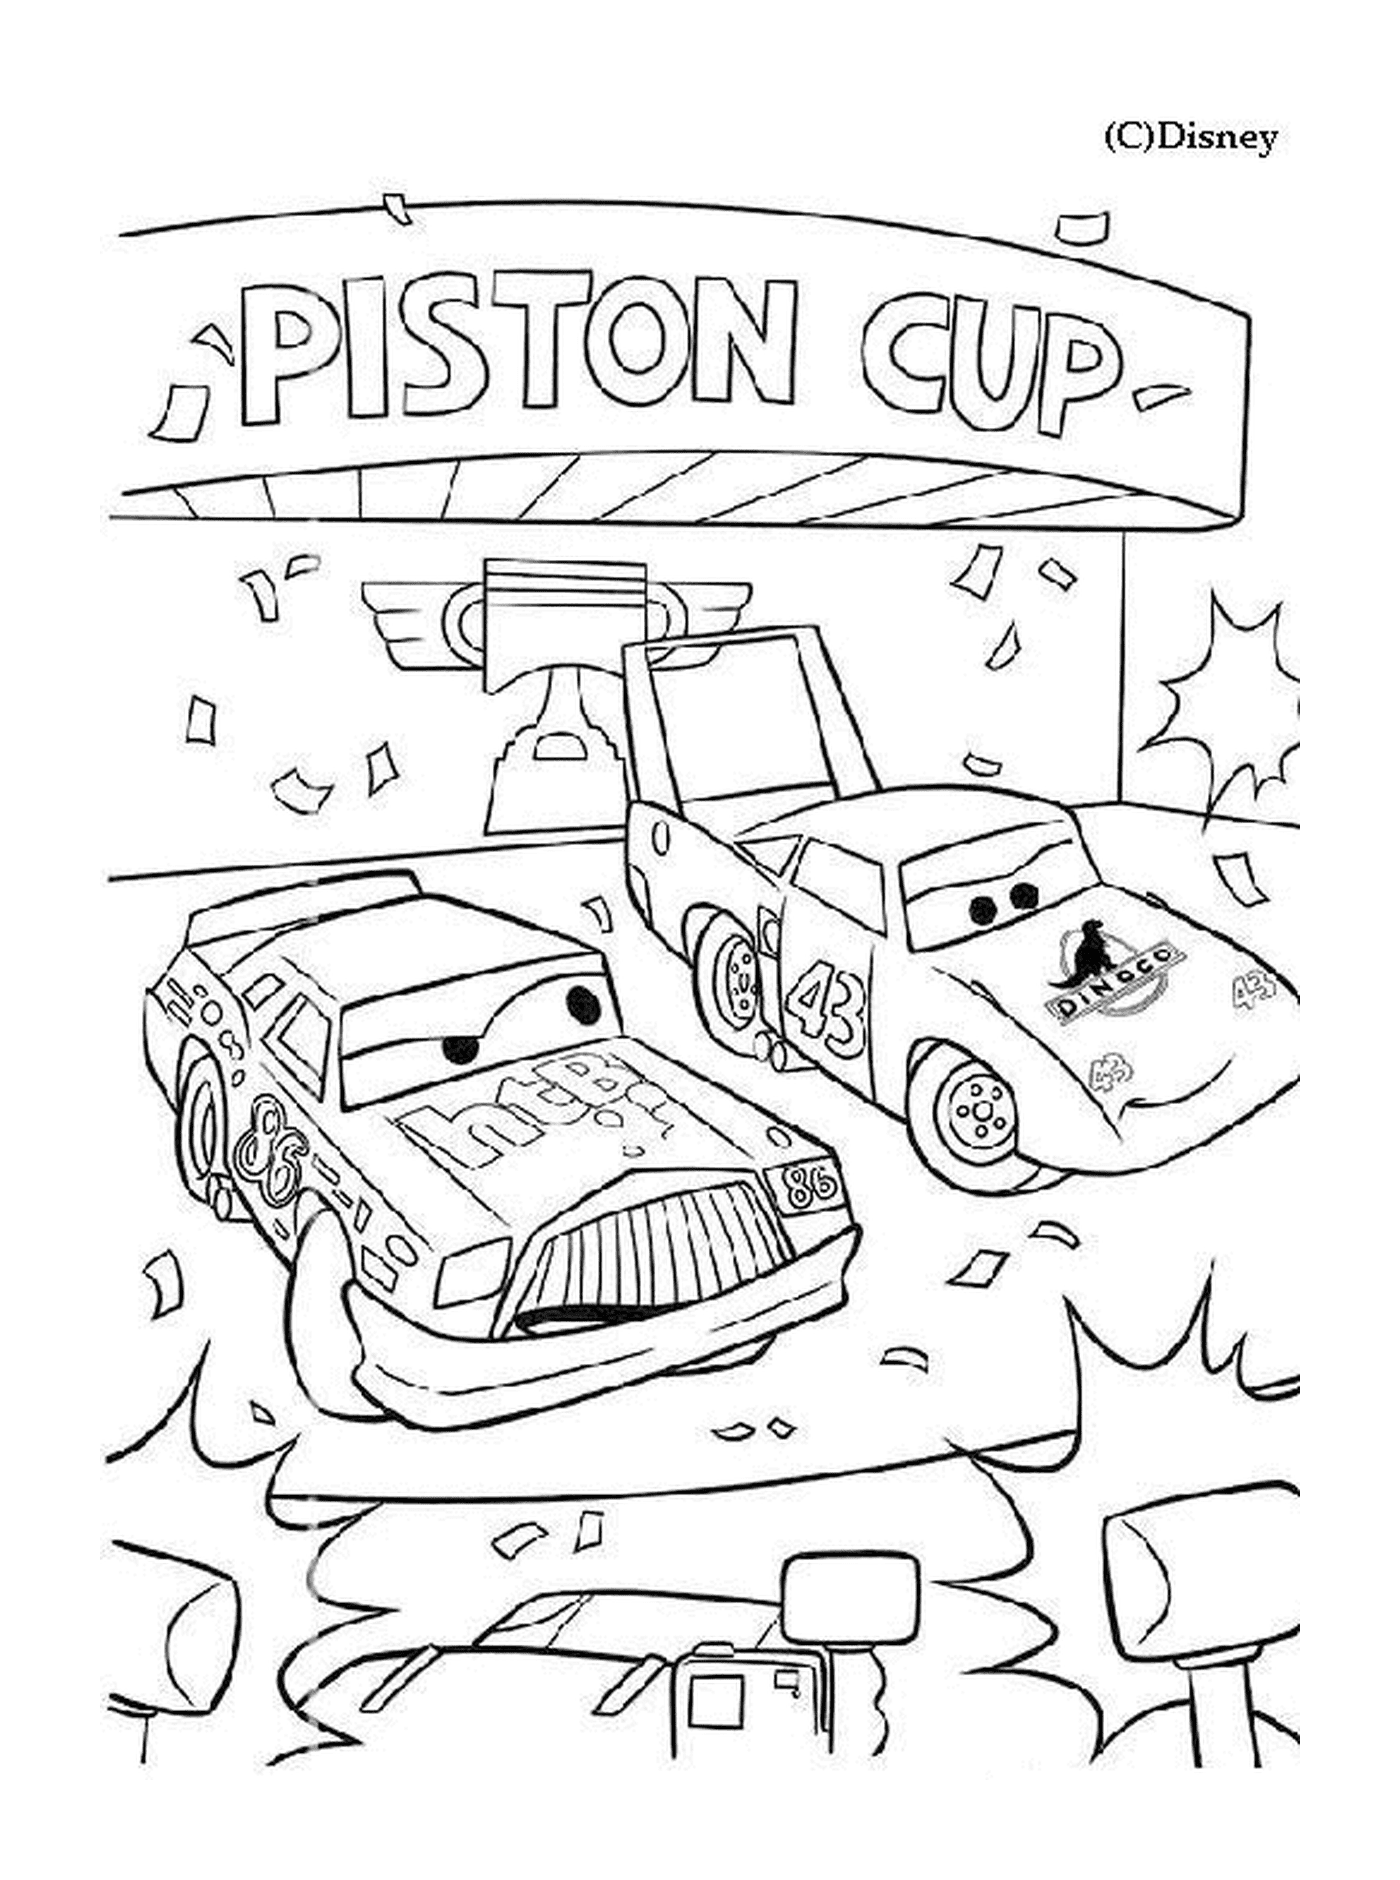   Le podium de la Piston Cup 